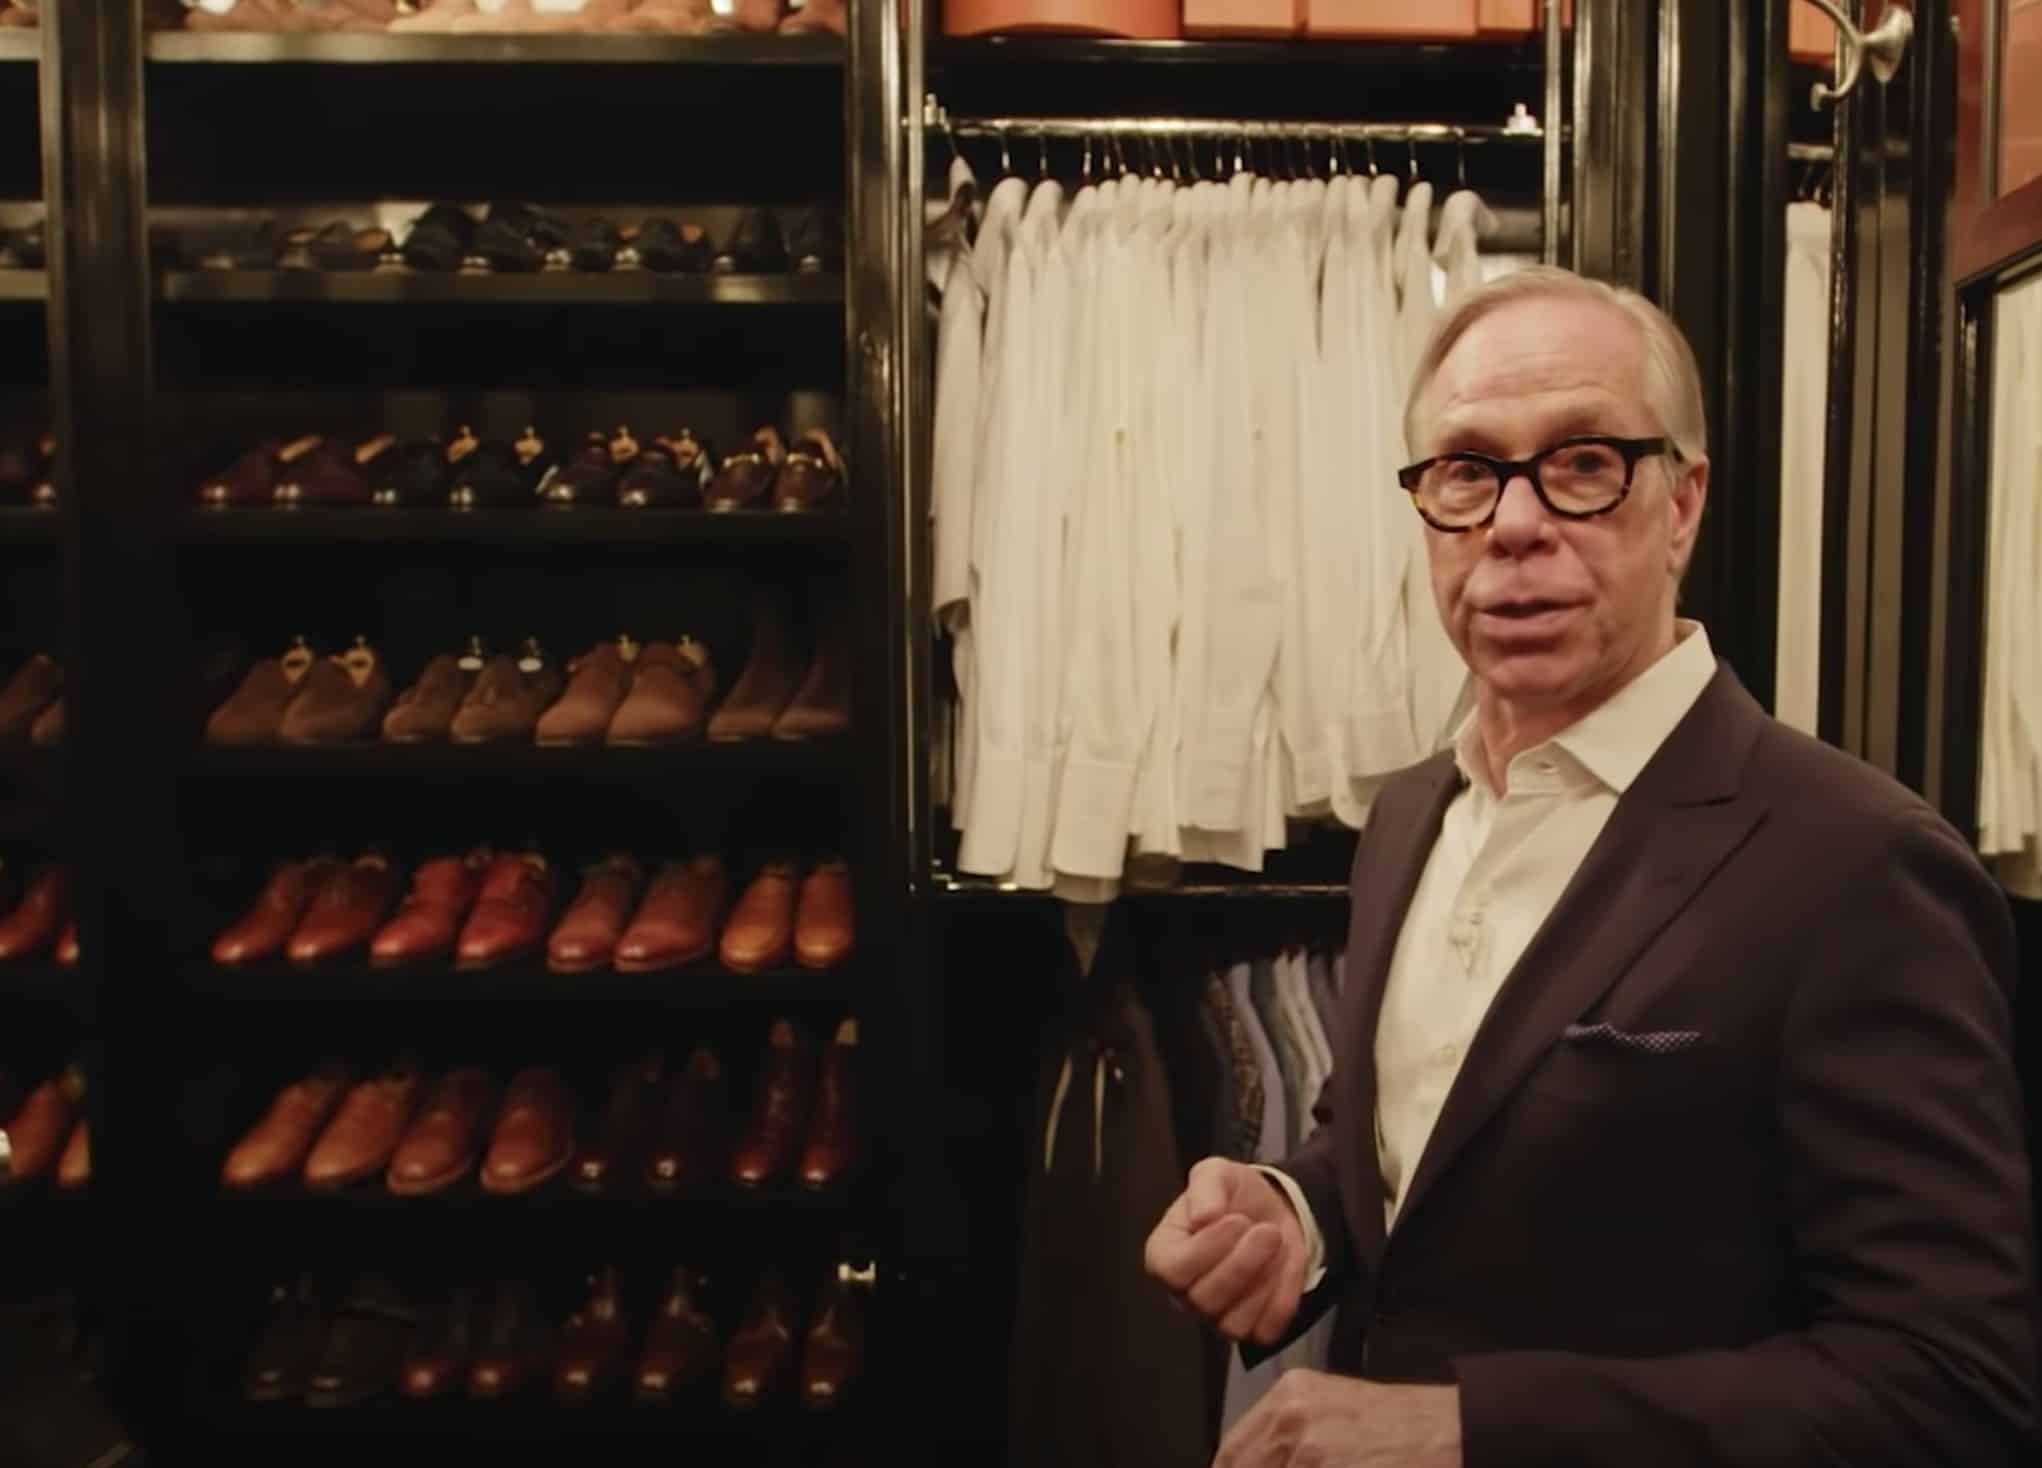 Fashion designer Tommy Hilfiger set up his wardrobe to look like a storefront